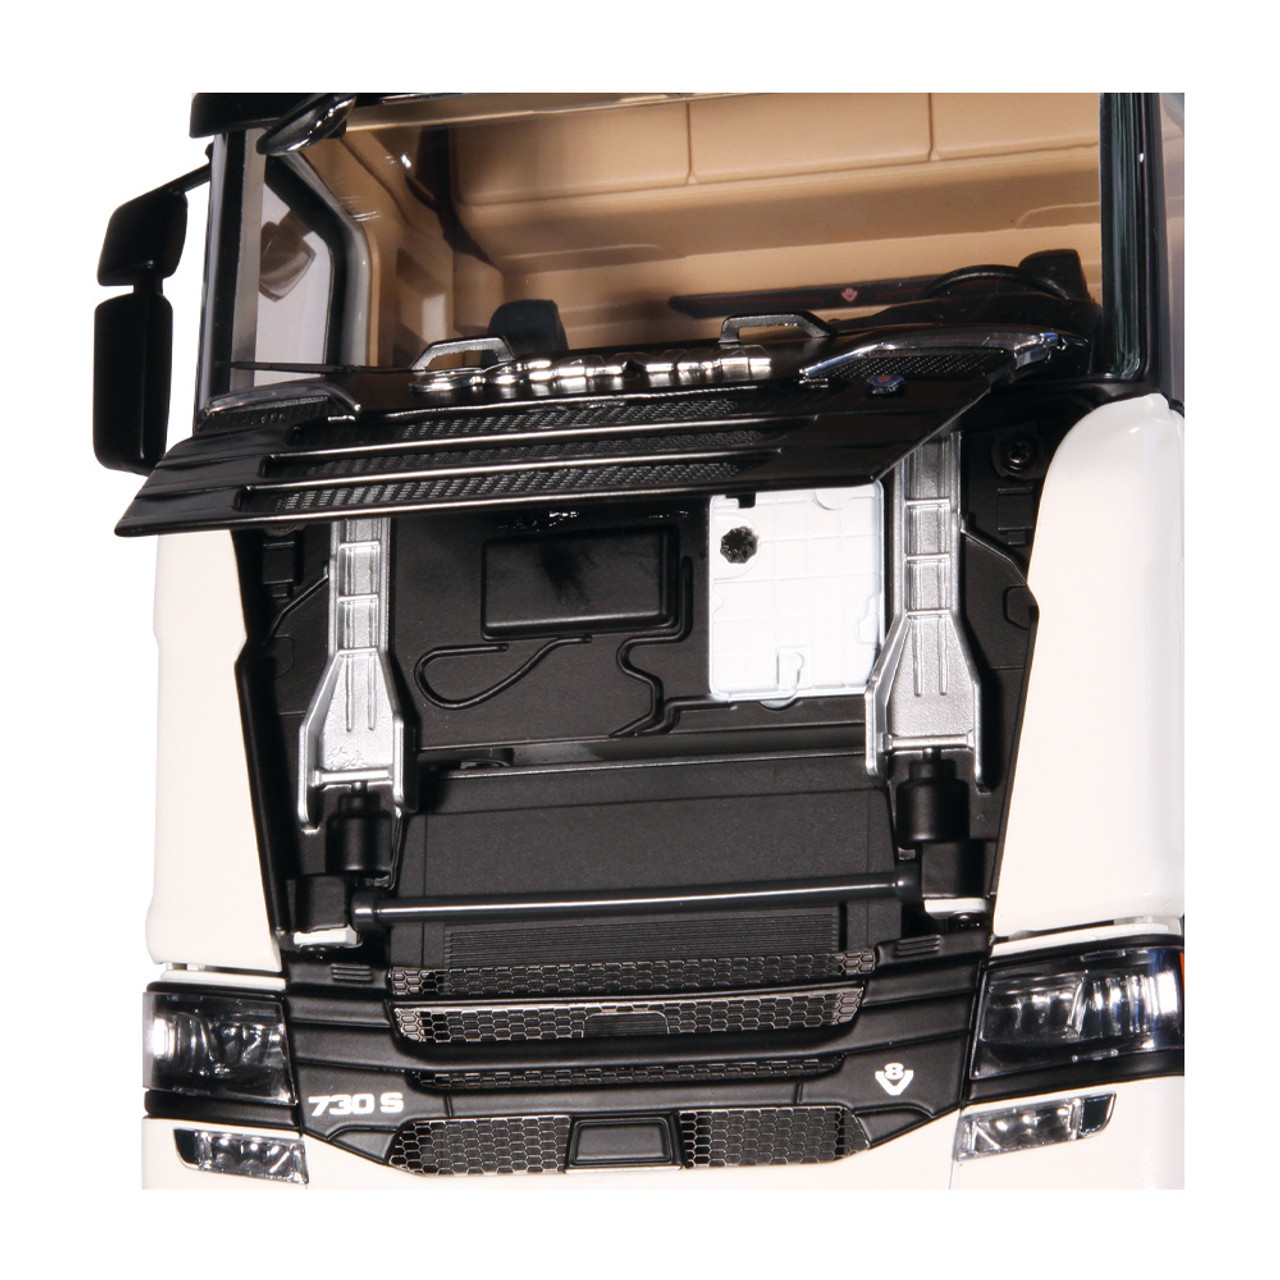 1/18 NZG Scania V8 730S 4x2 Truck Head (White) Diecast Car Model